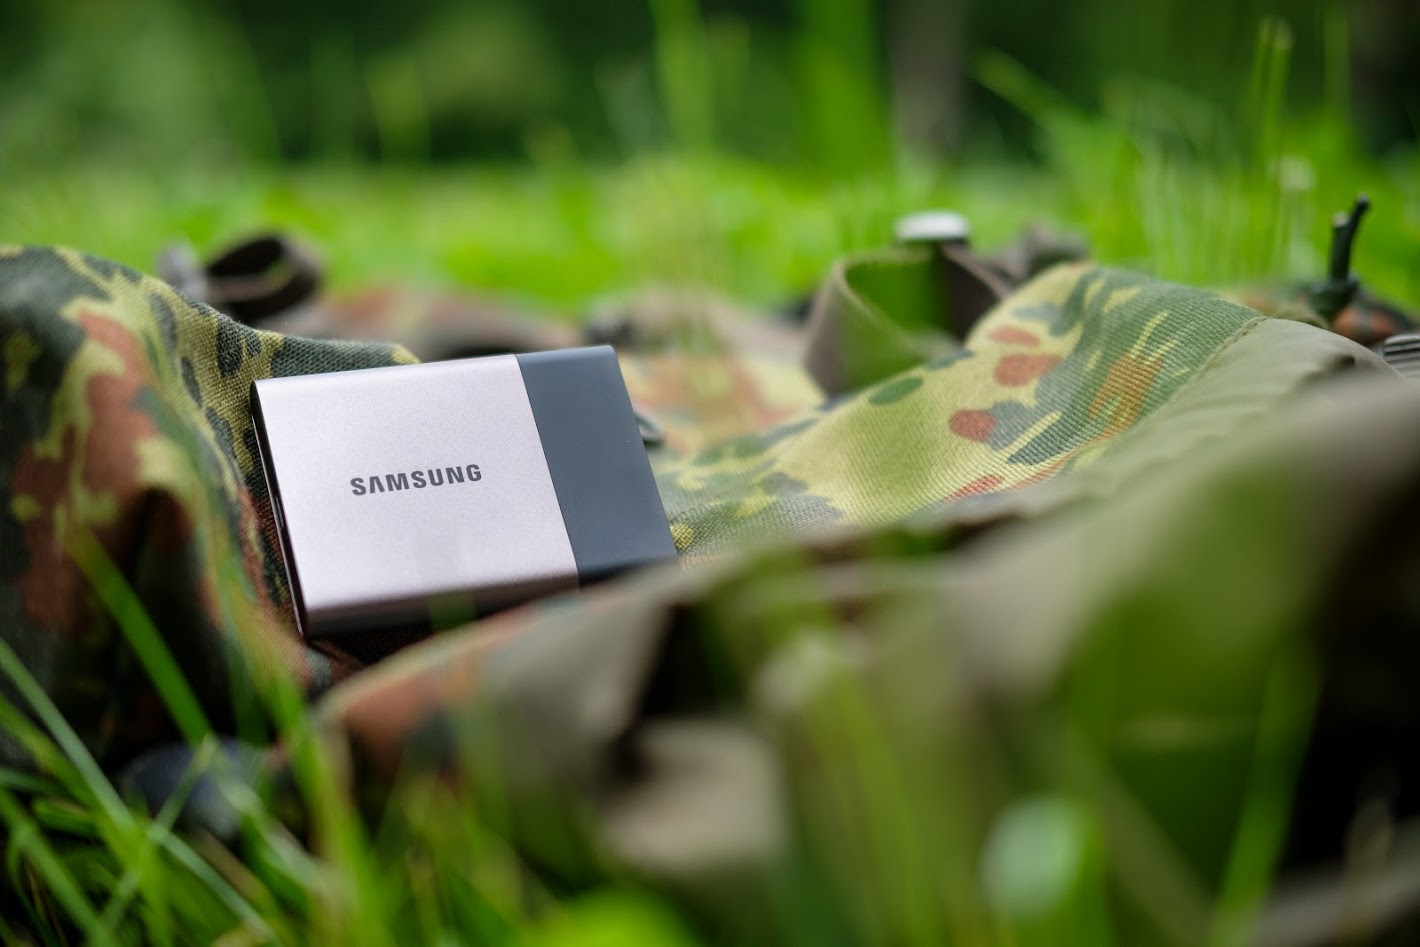 Samsung Portable SSD T3 - Lesertest Nils W. Rucksack